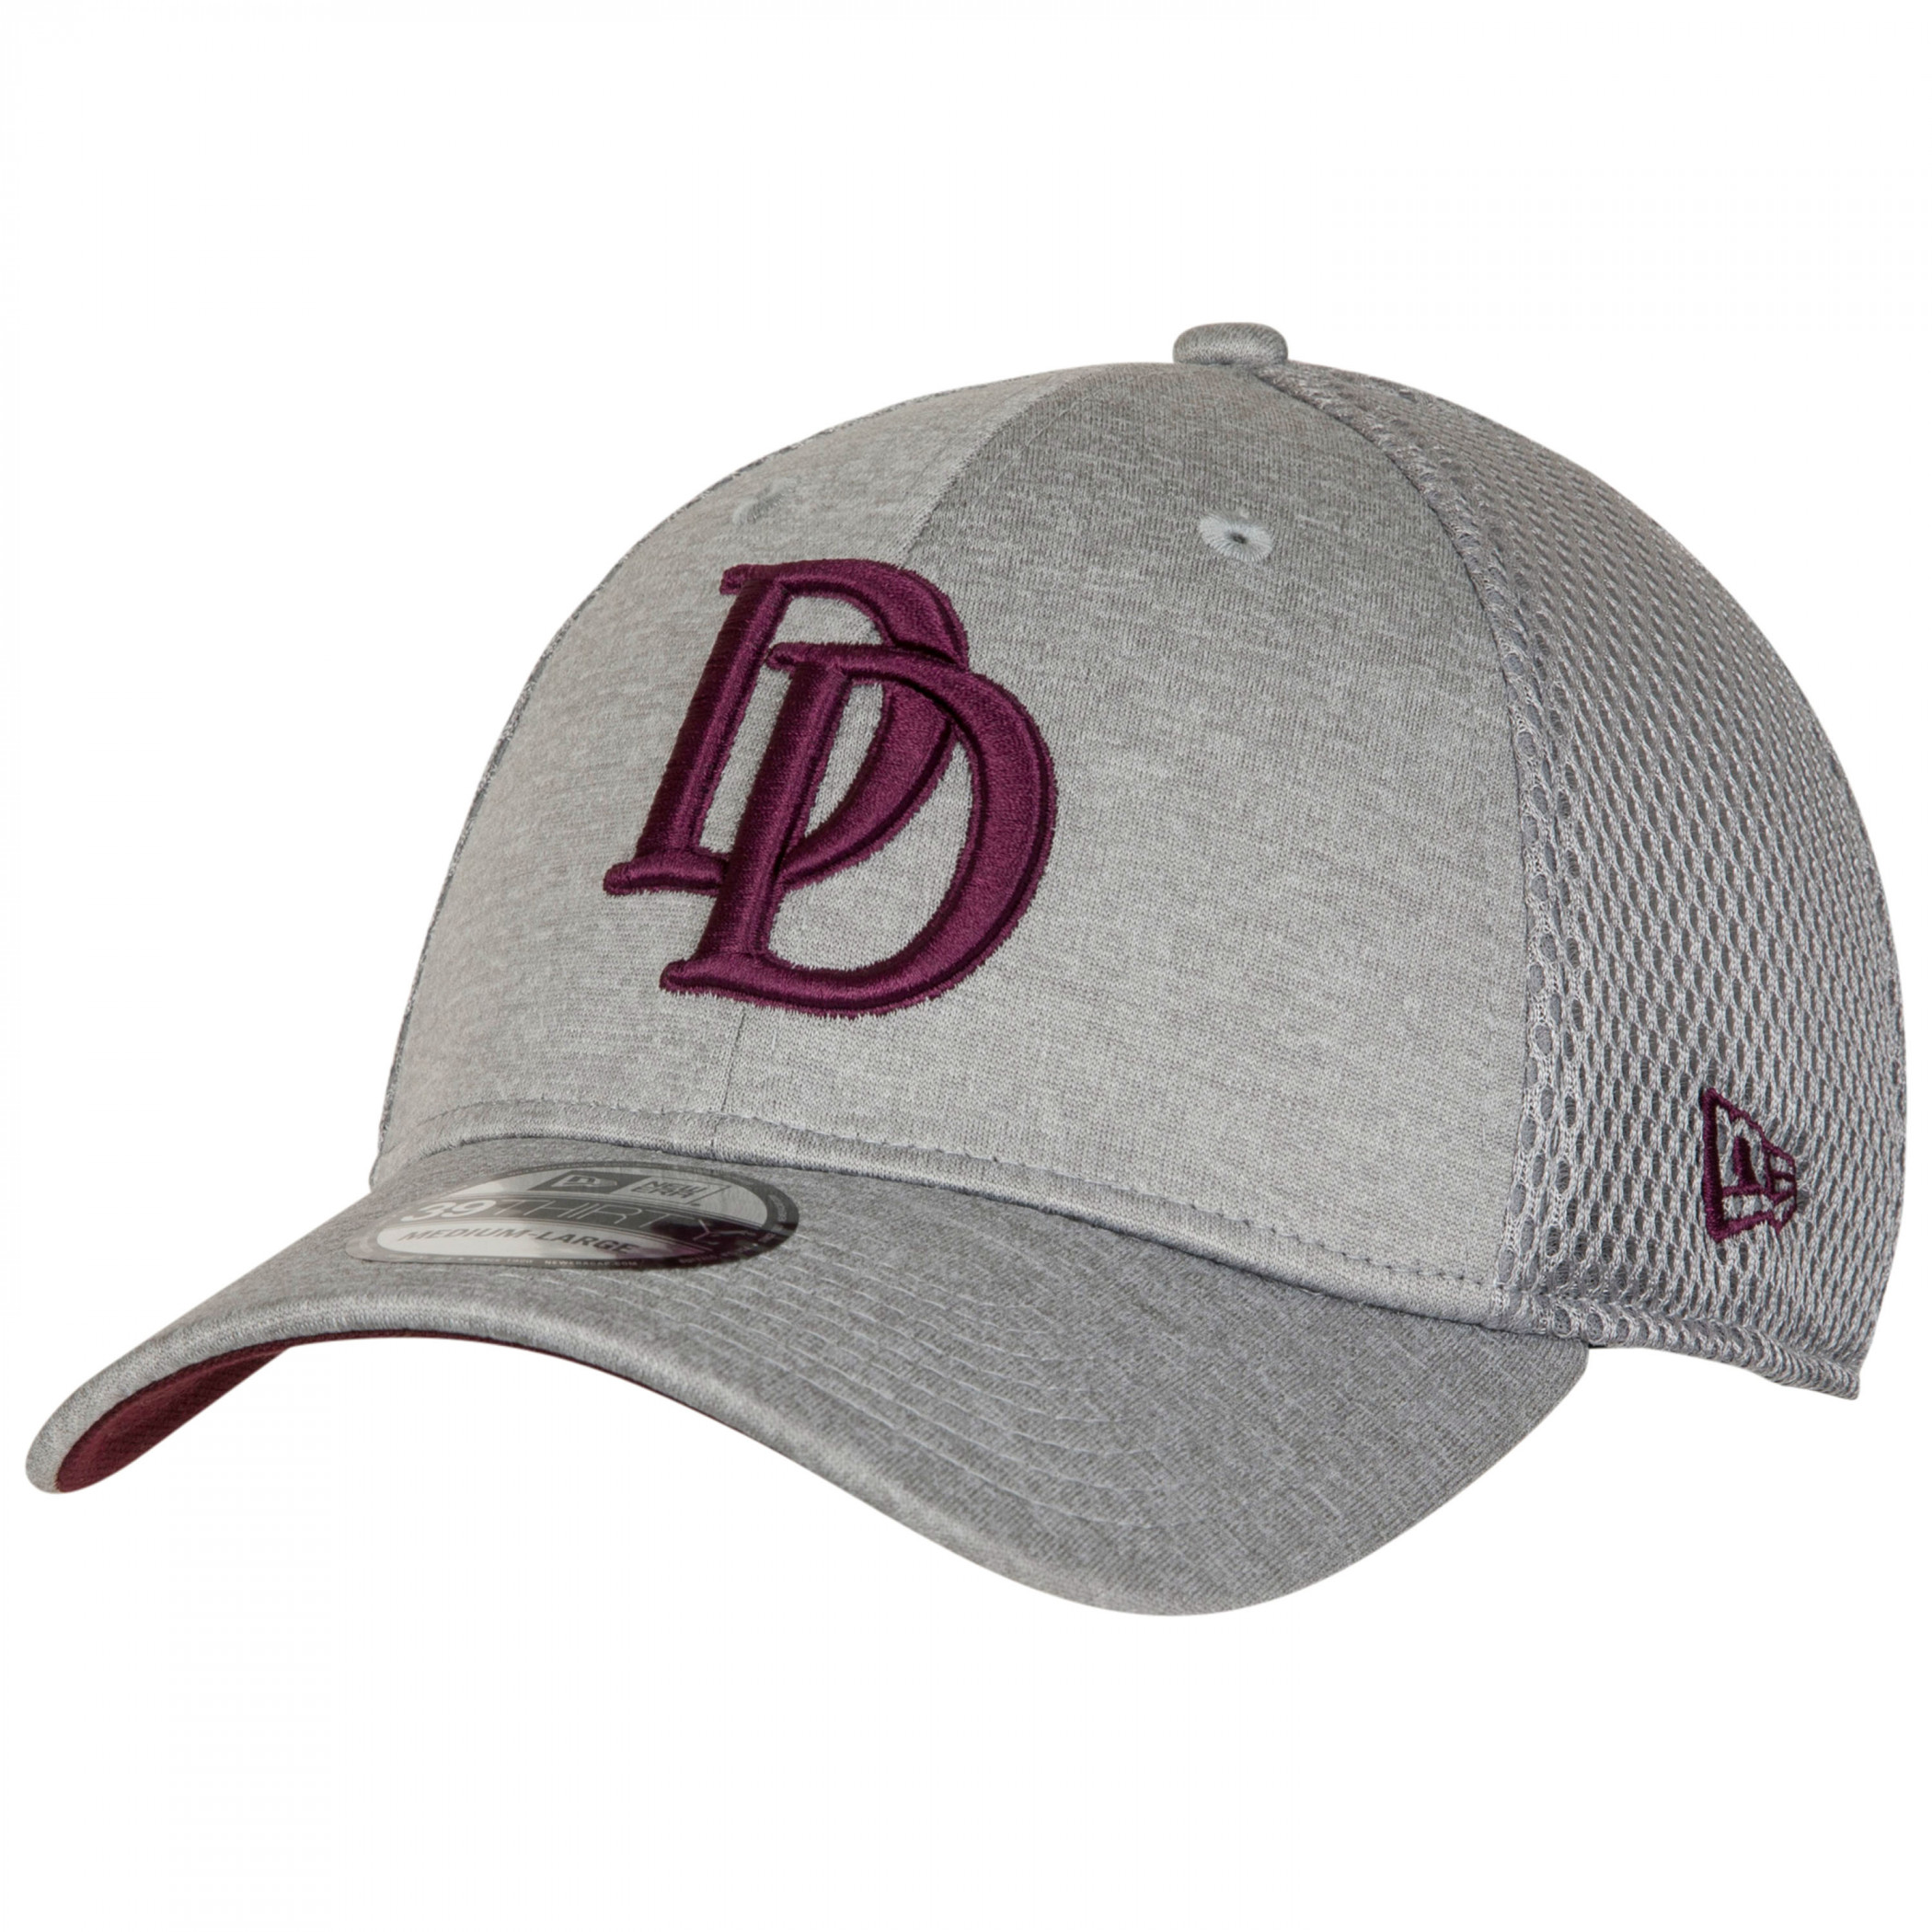 Dare Devil Symbol Grey Shadow Tech New Era 39Thirty Fitted Hat